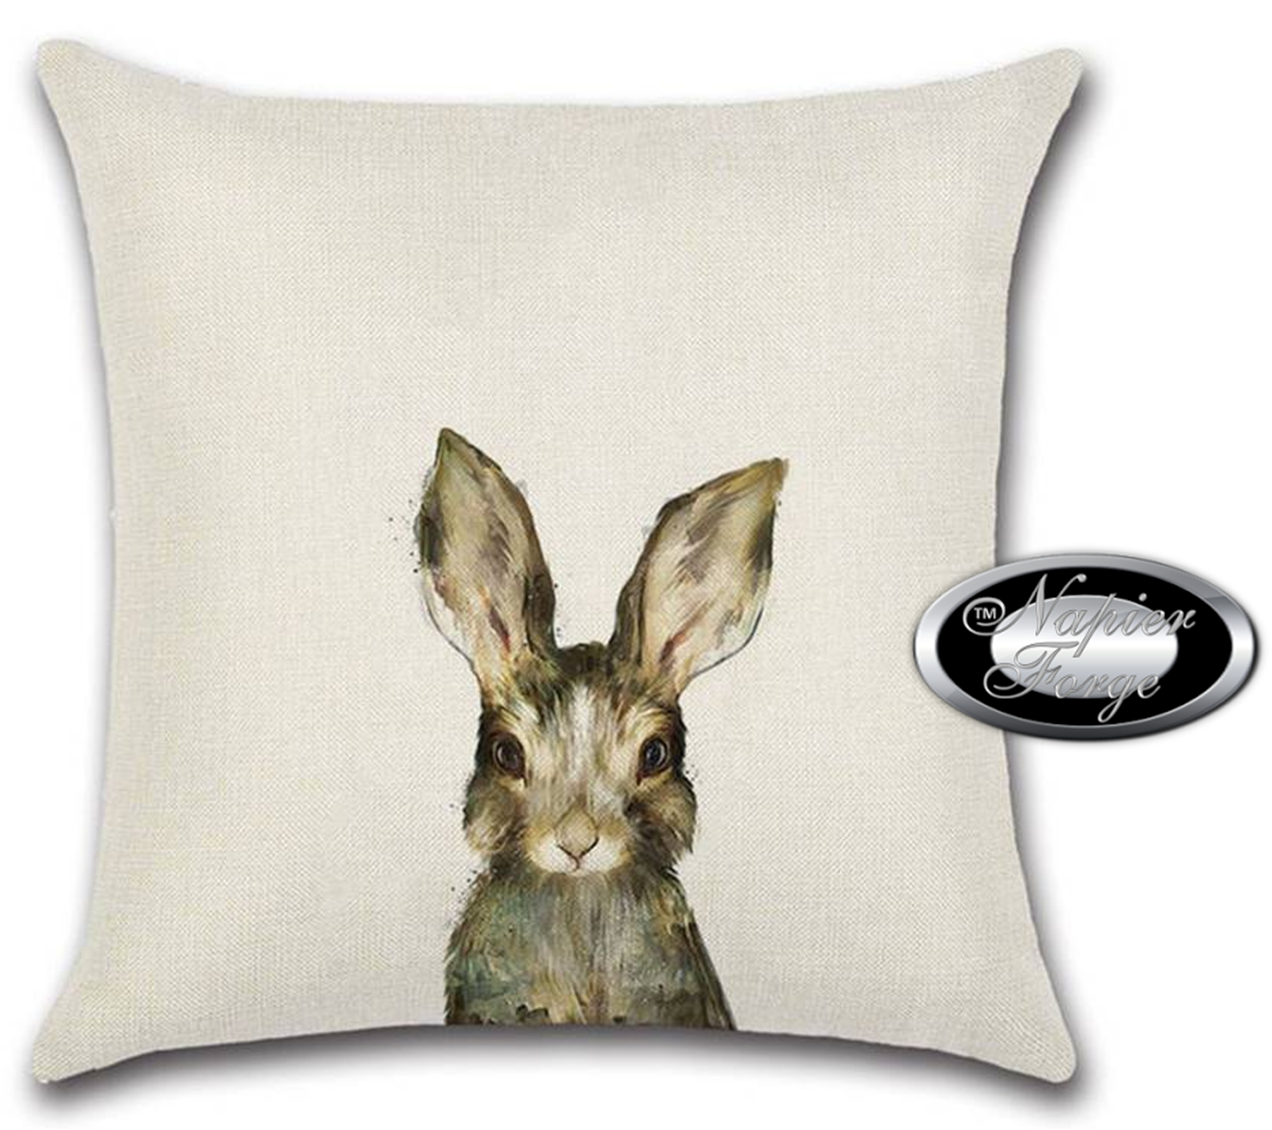 Farmhouse Cotton Linen Blend Cushion Cover 45cm x 45cm - Design Rabbit Glance *Free Shipping